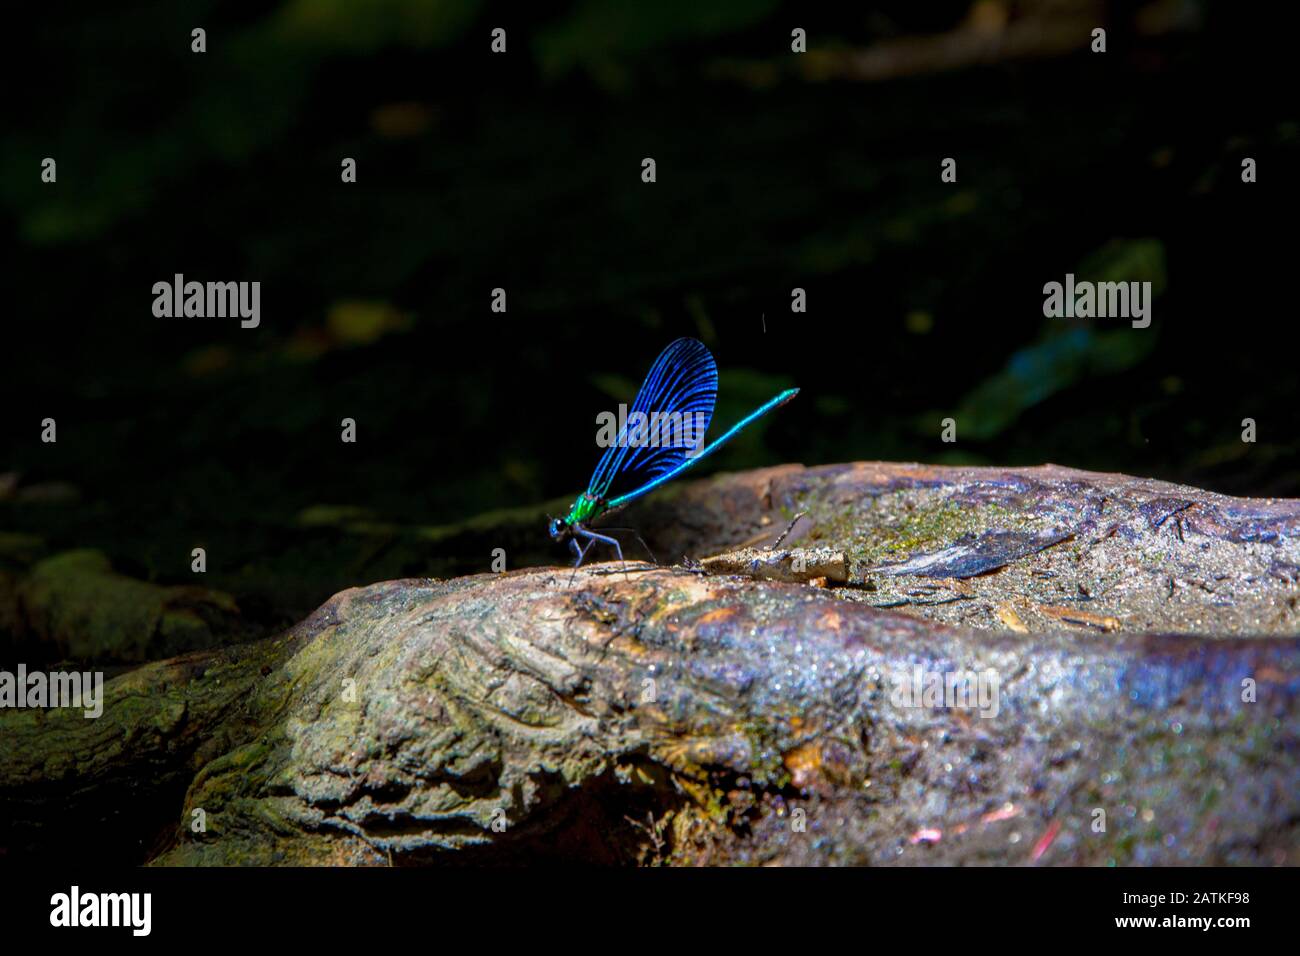 Zygoptera, damselfly, dragonfly.  Blue Zygoptera (damselfly, dragonfly) on the tree in darkness background Stock Photo